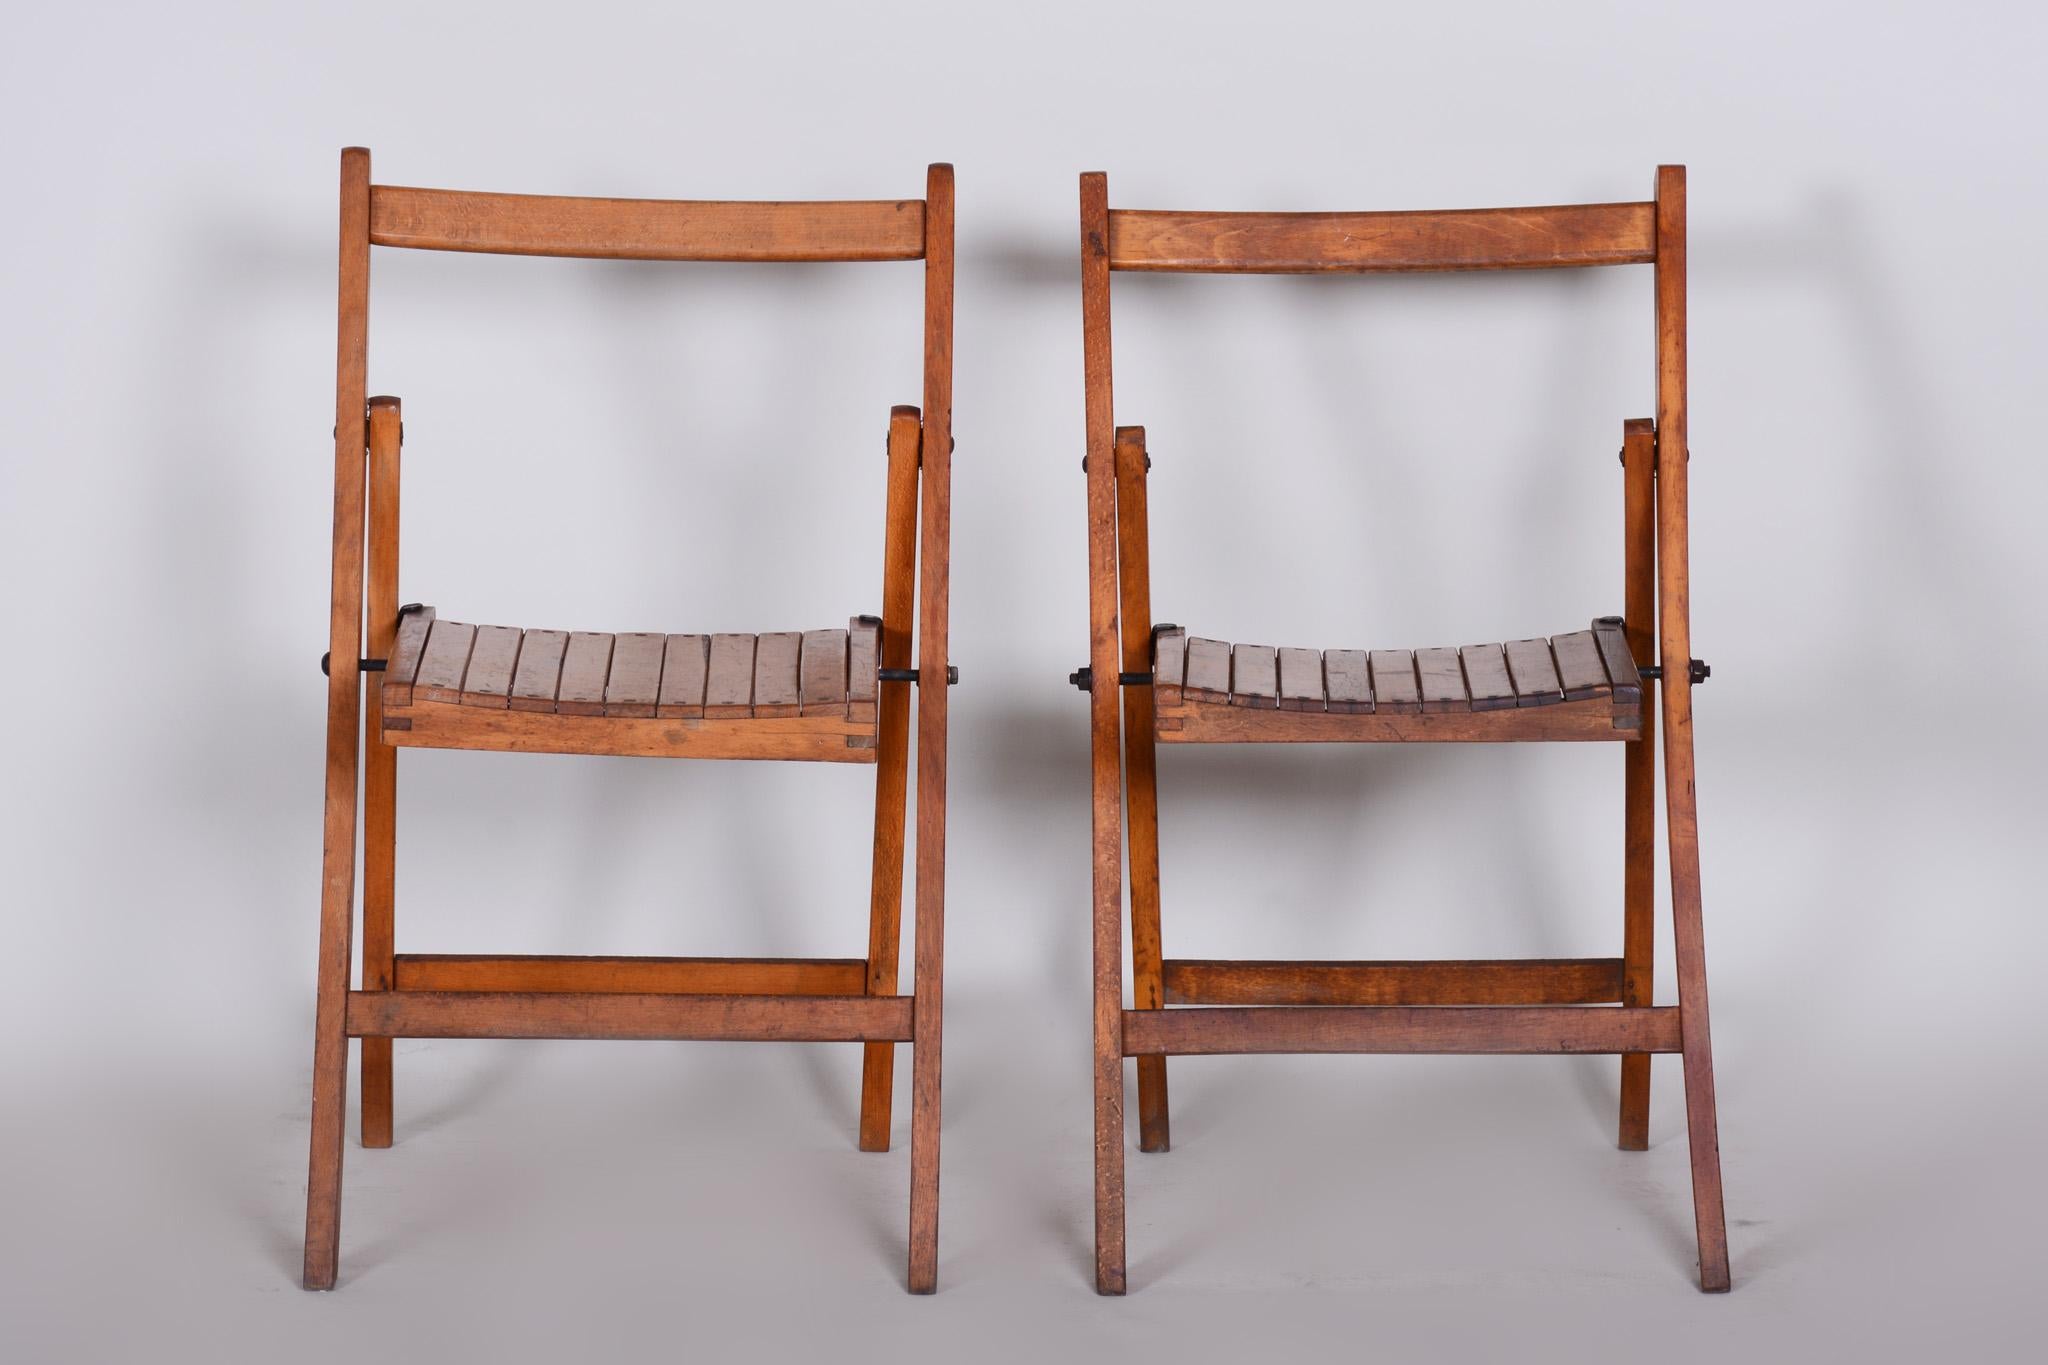 Chair, midcentury, Czechoslovakia
Period 1950-1960.
Material: Beech.